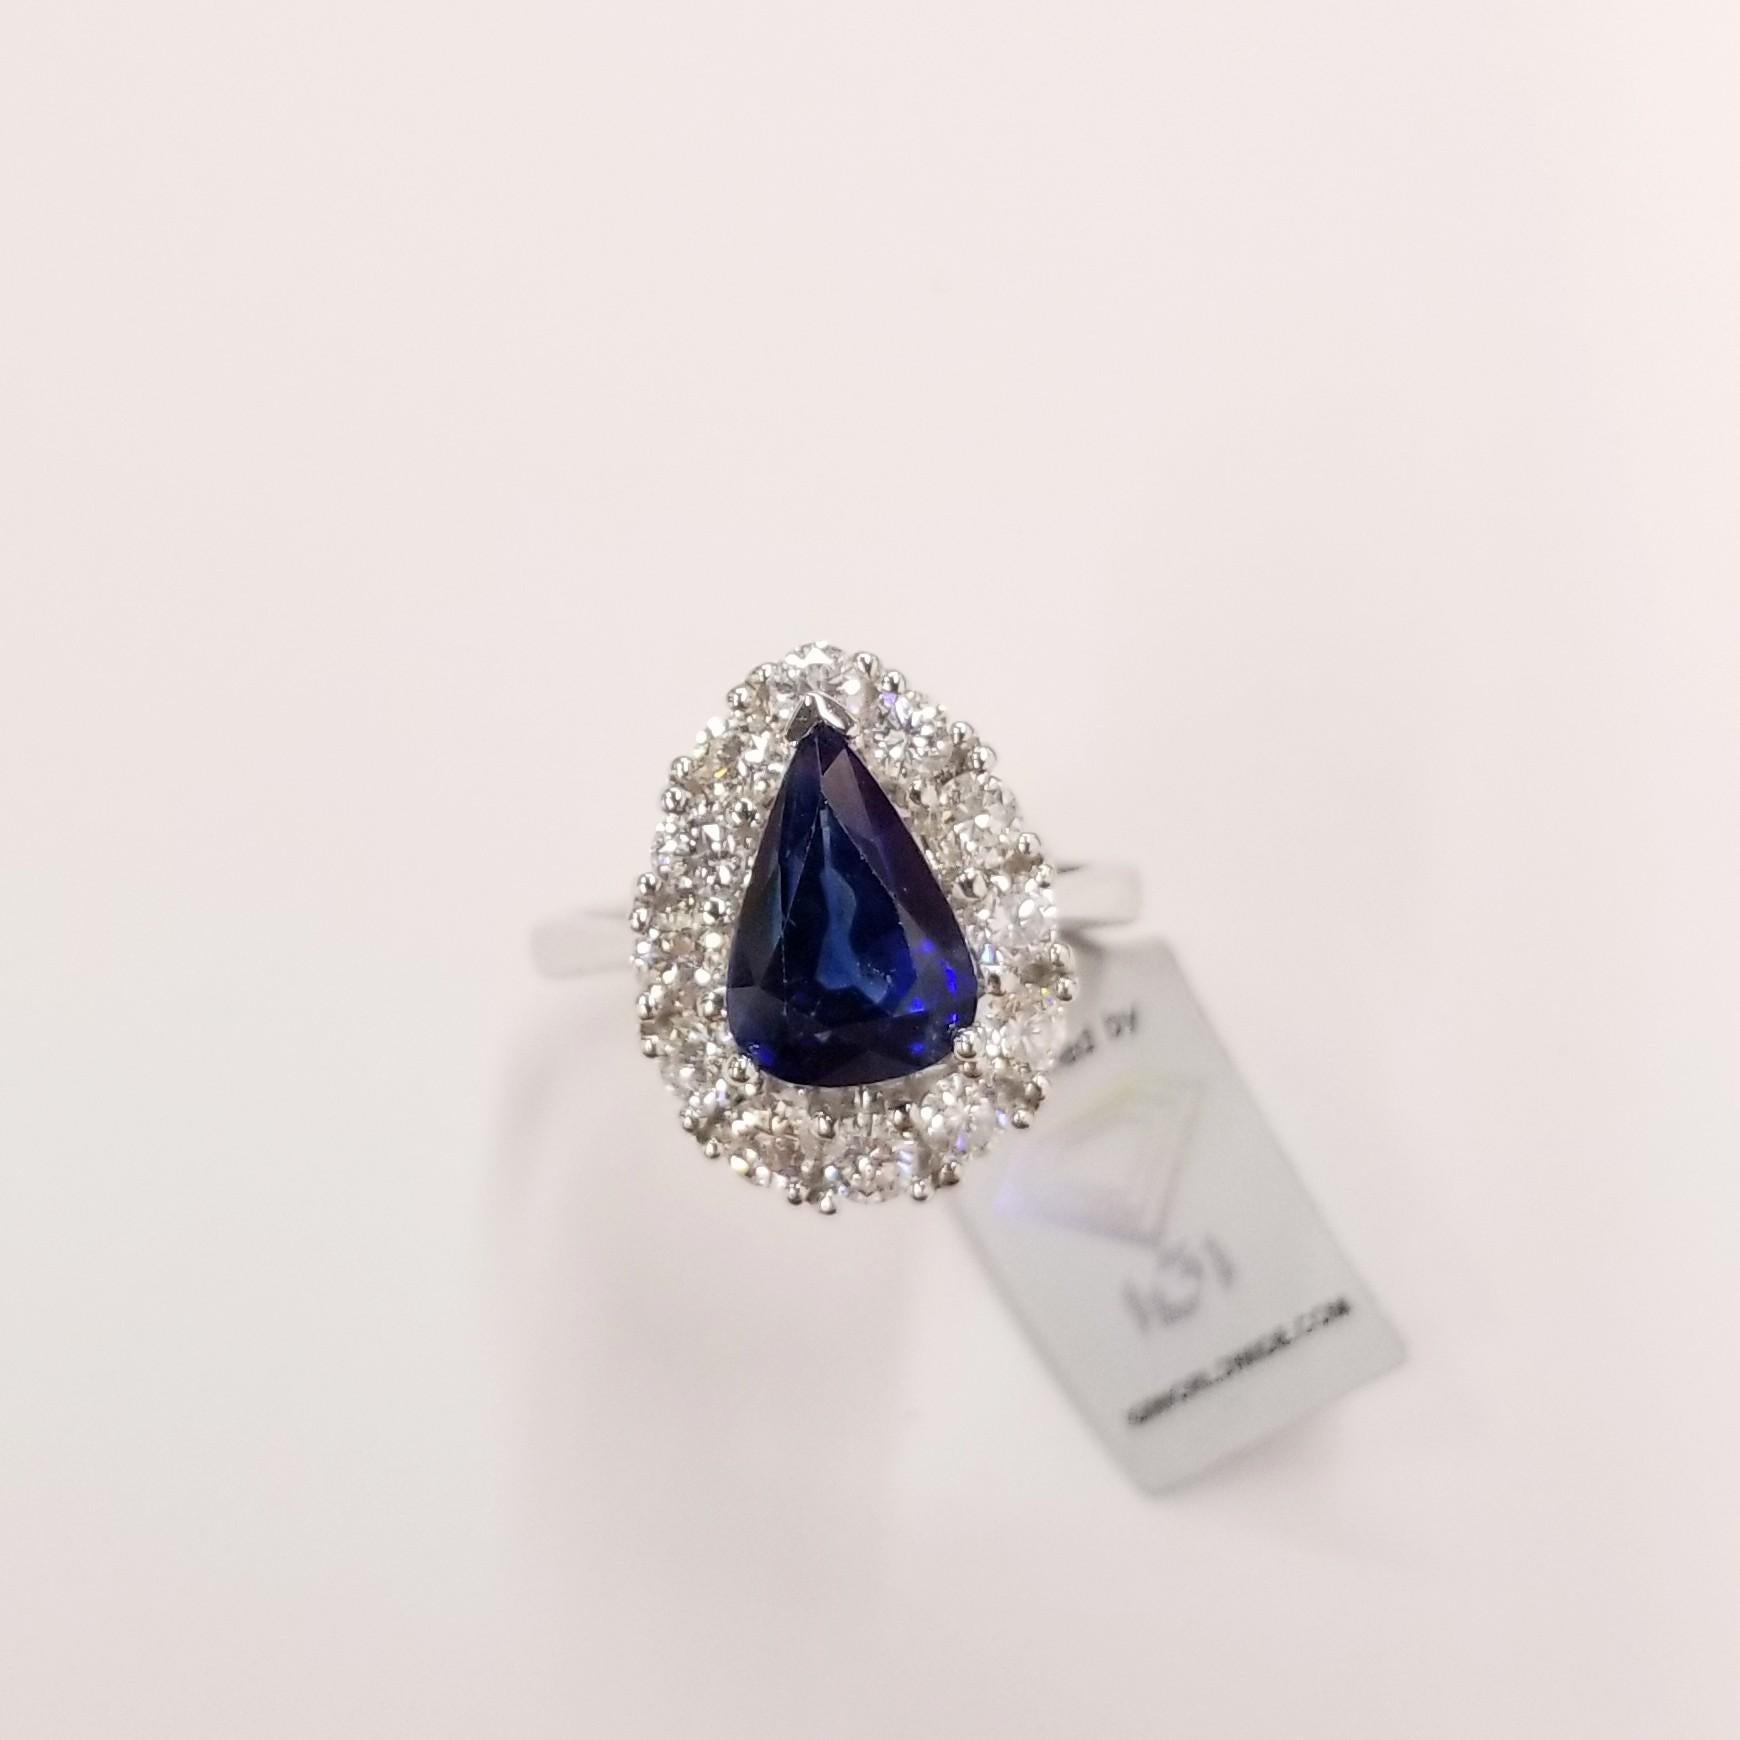 IGI Certified 3.08 Carat Blue Sapphire & Diamond Ring in 18K White Gold For Sale 3